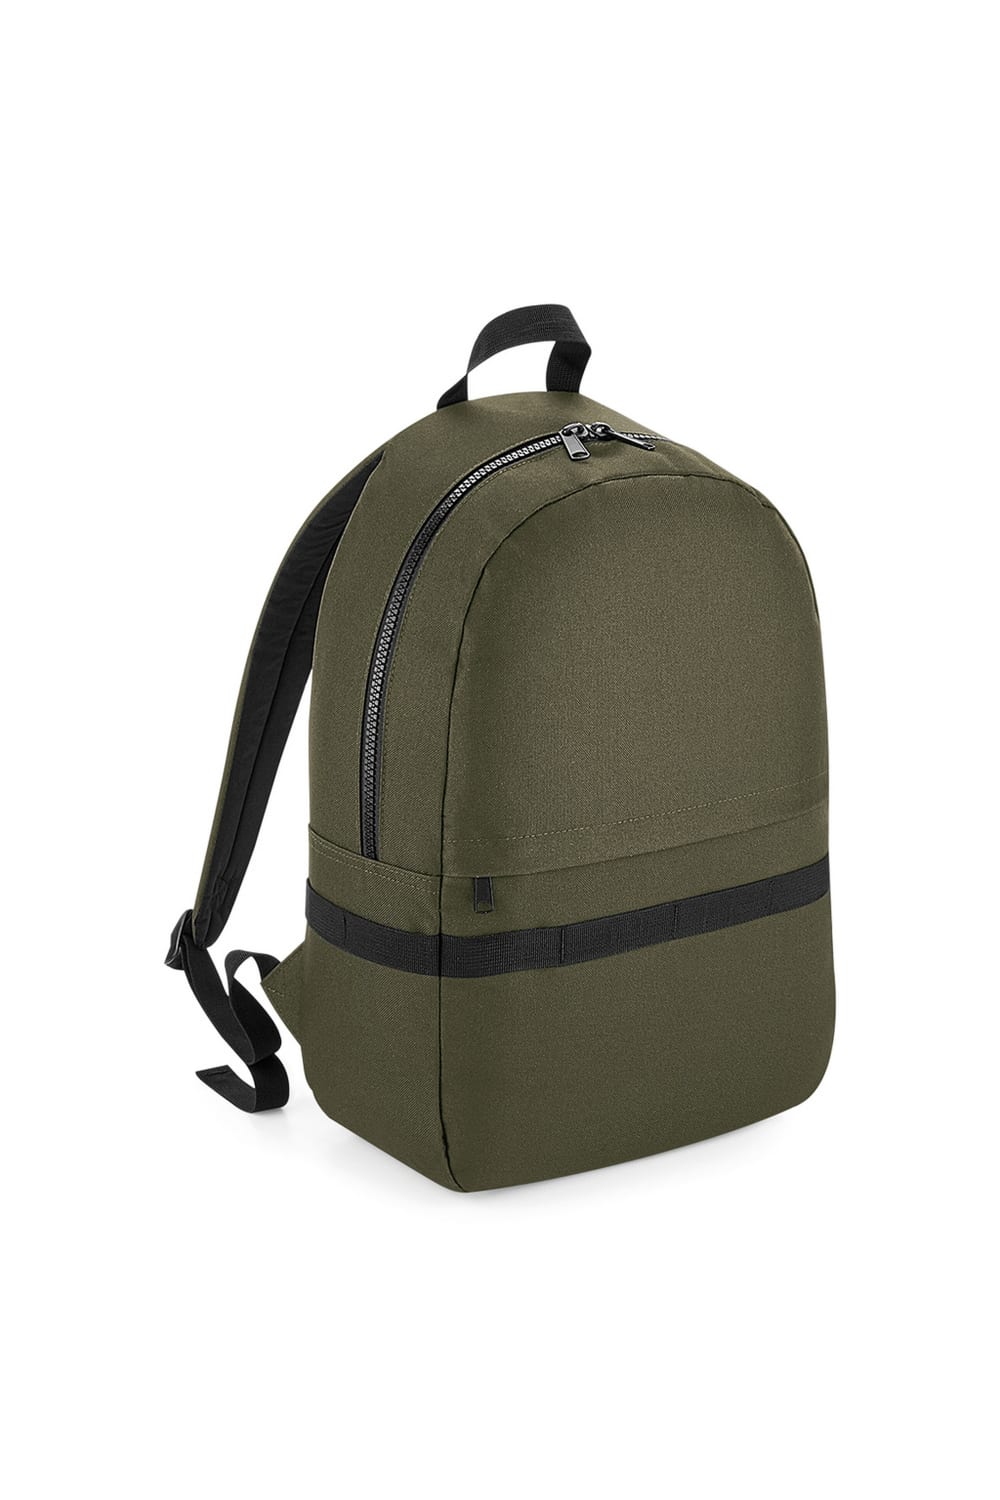 Modulr 5.2 Gallon Backpack - Military Green